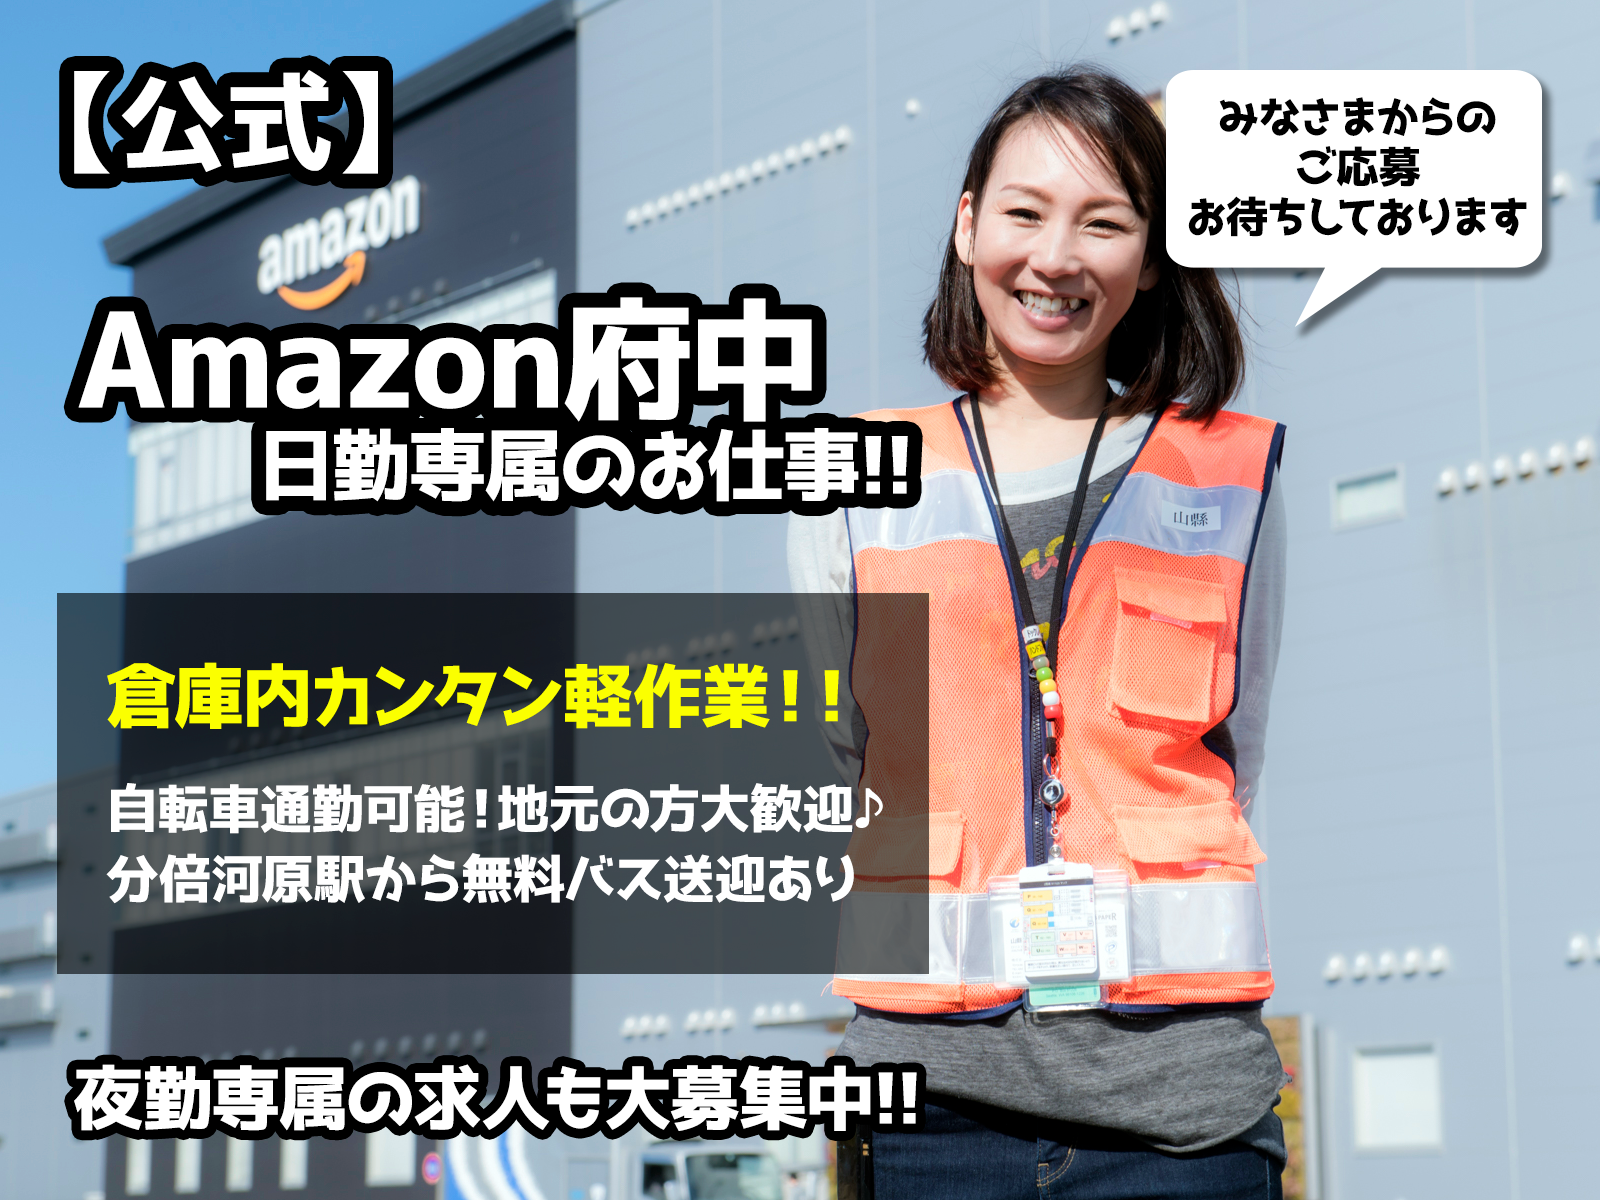 Amazon アマゾン 府中物流倉庫内での簡単軽作業 梱包 仕分けの採用 公式 株式会社ワールドインテック ロジスティクス事業の採用求人ページ